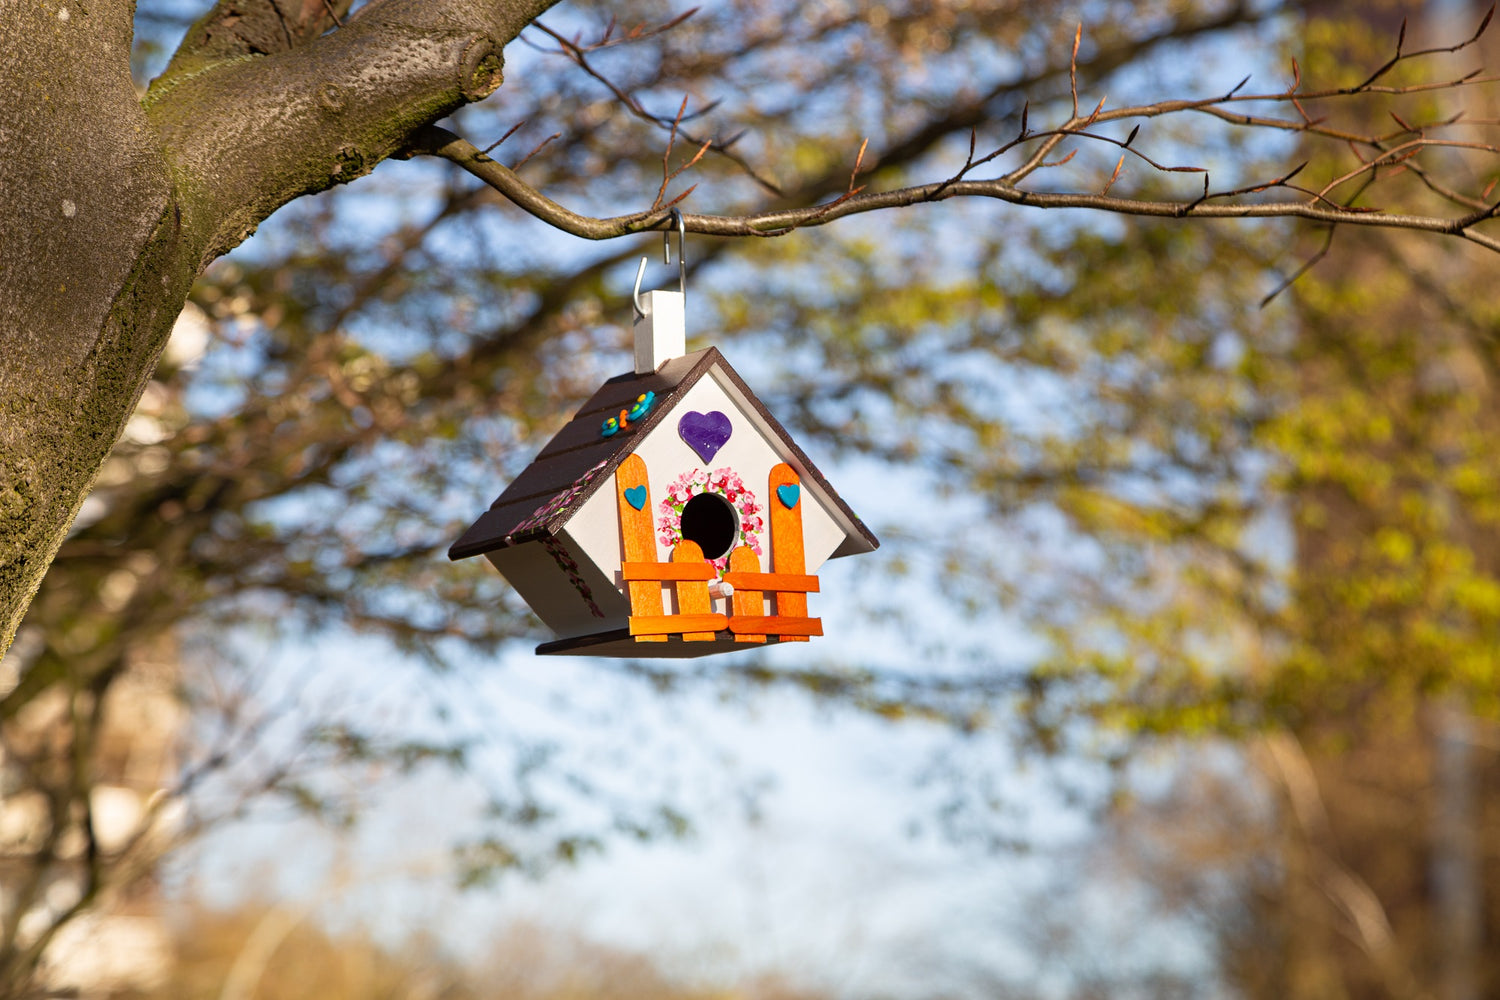 Belmique Bird House - Multicolored - 100% HANDMADE